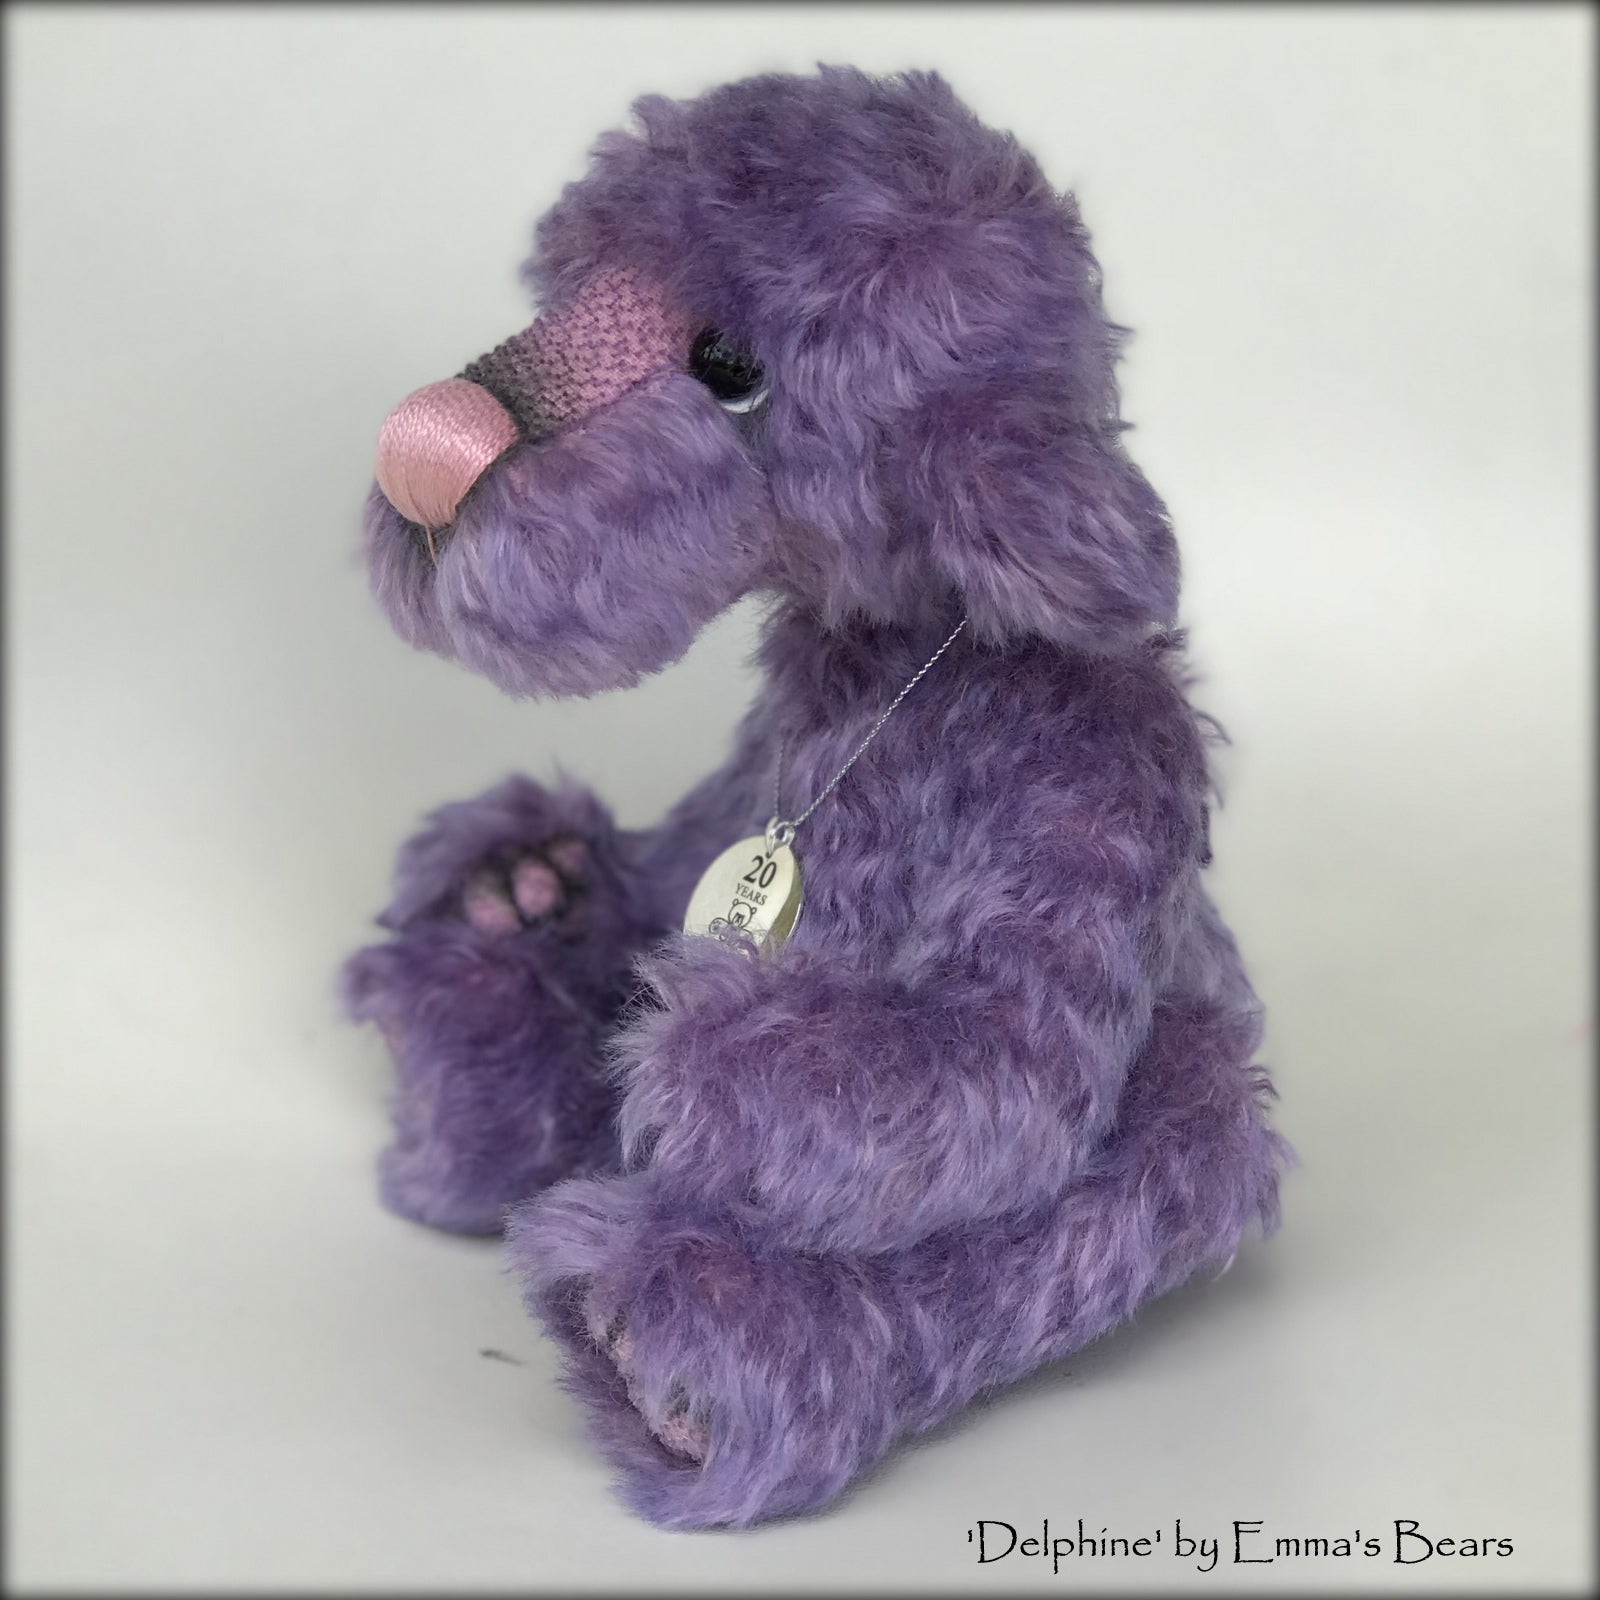 Delphine - 20 Years of Emma's Bears Commemorative Teddy - OOAK in a series